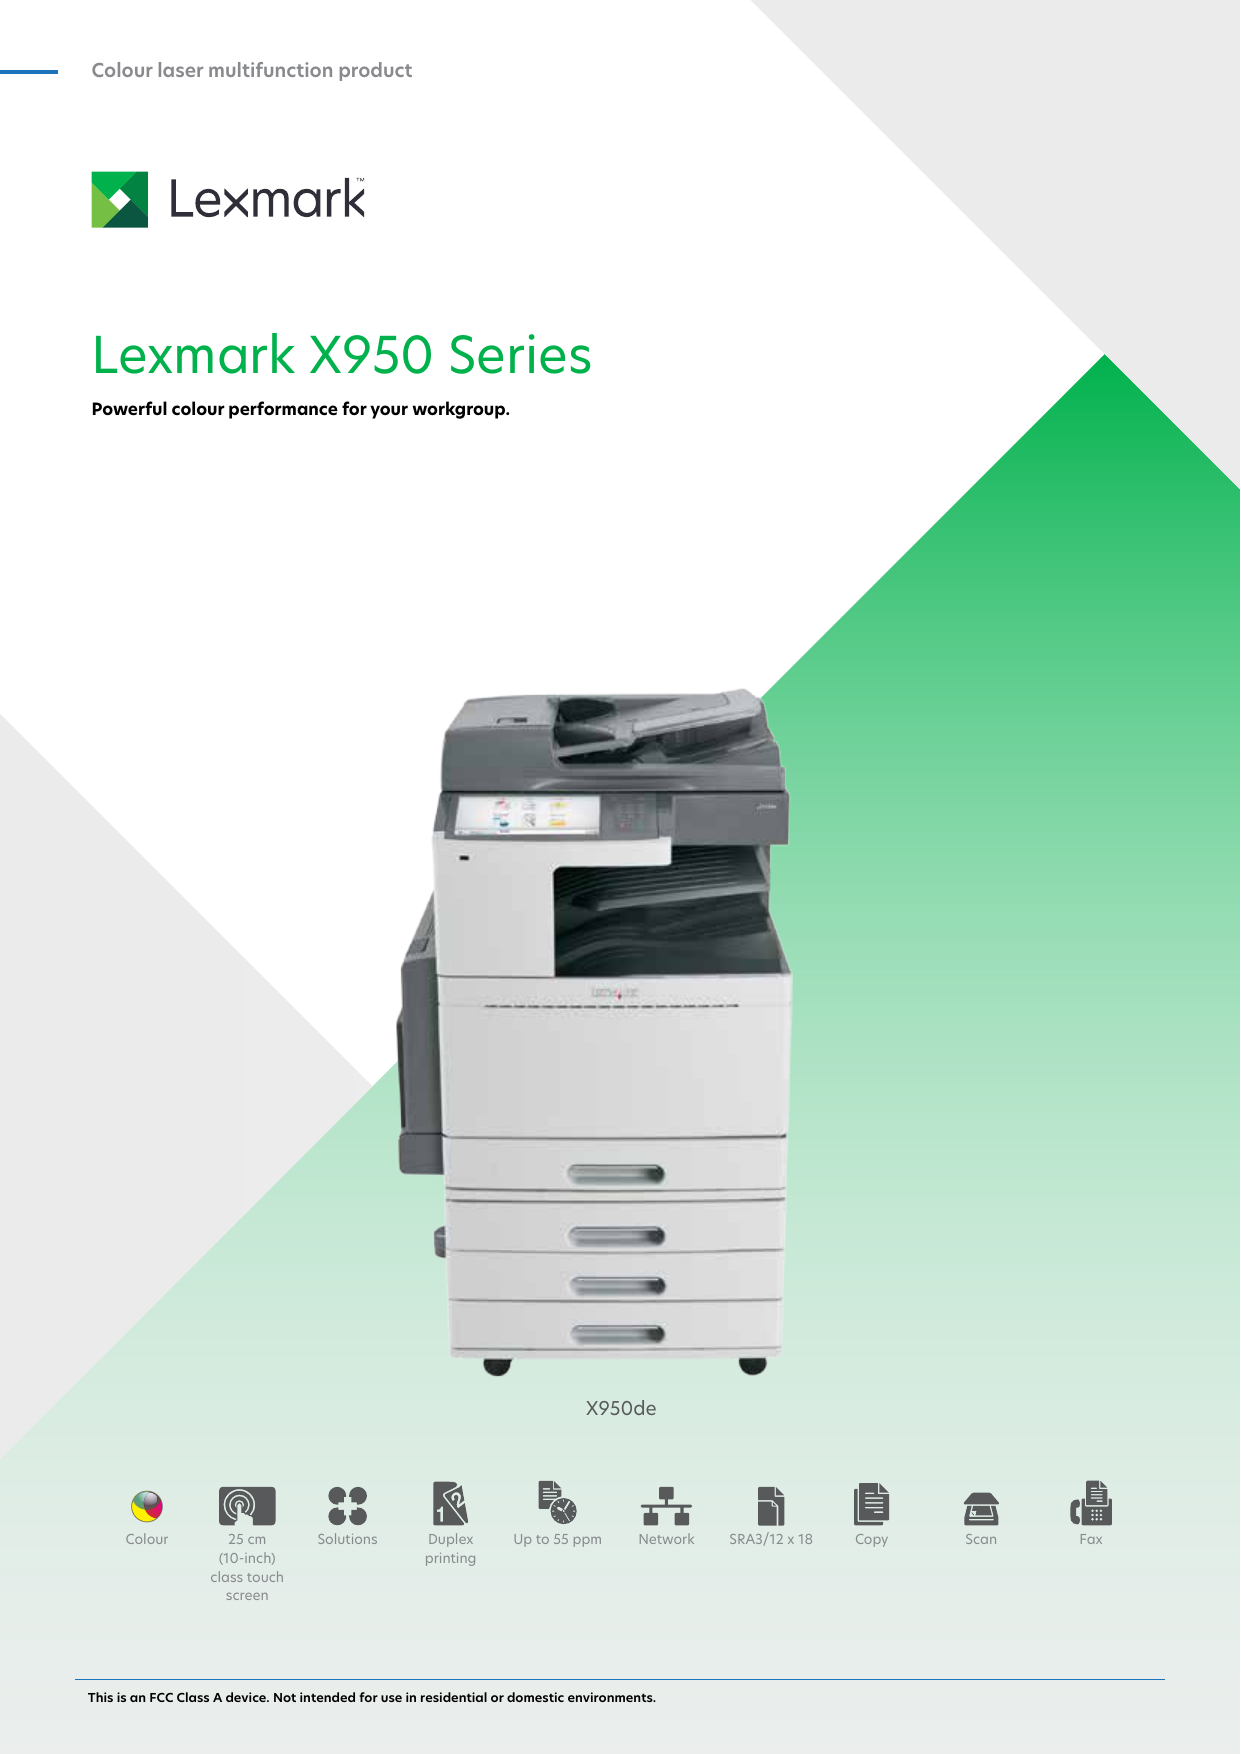 lexmark 2300 series scanner software